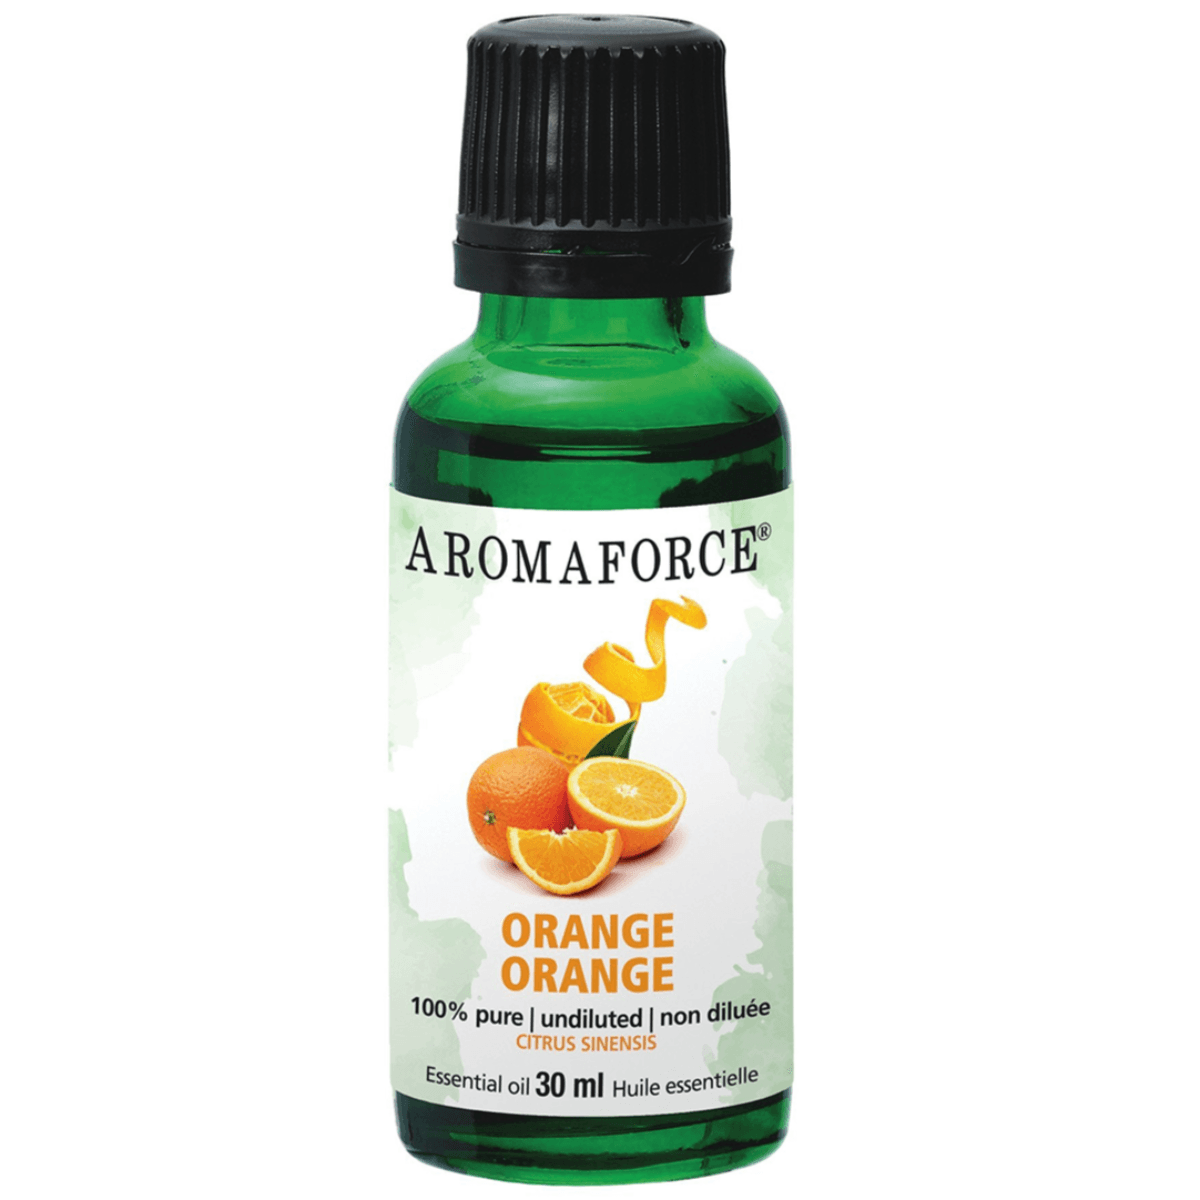 Aromaforce Essential Oil Orange 30mL Essential Oils at Village Vitamin Store